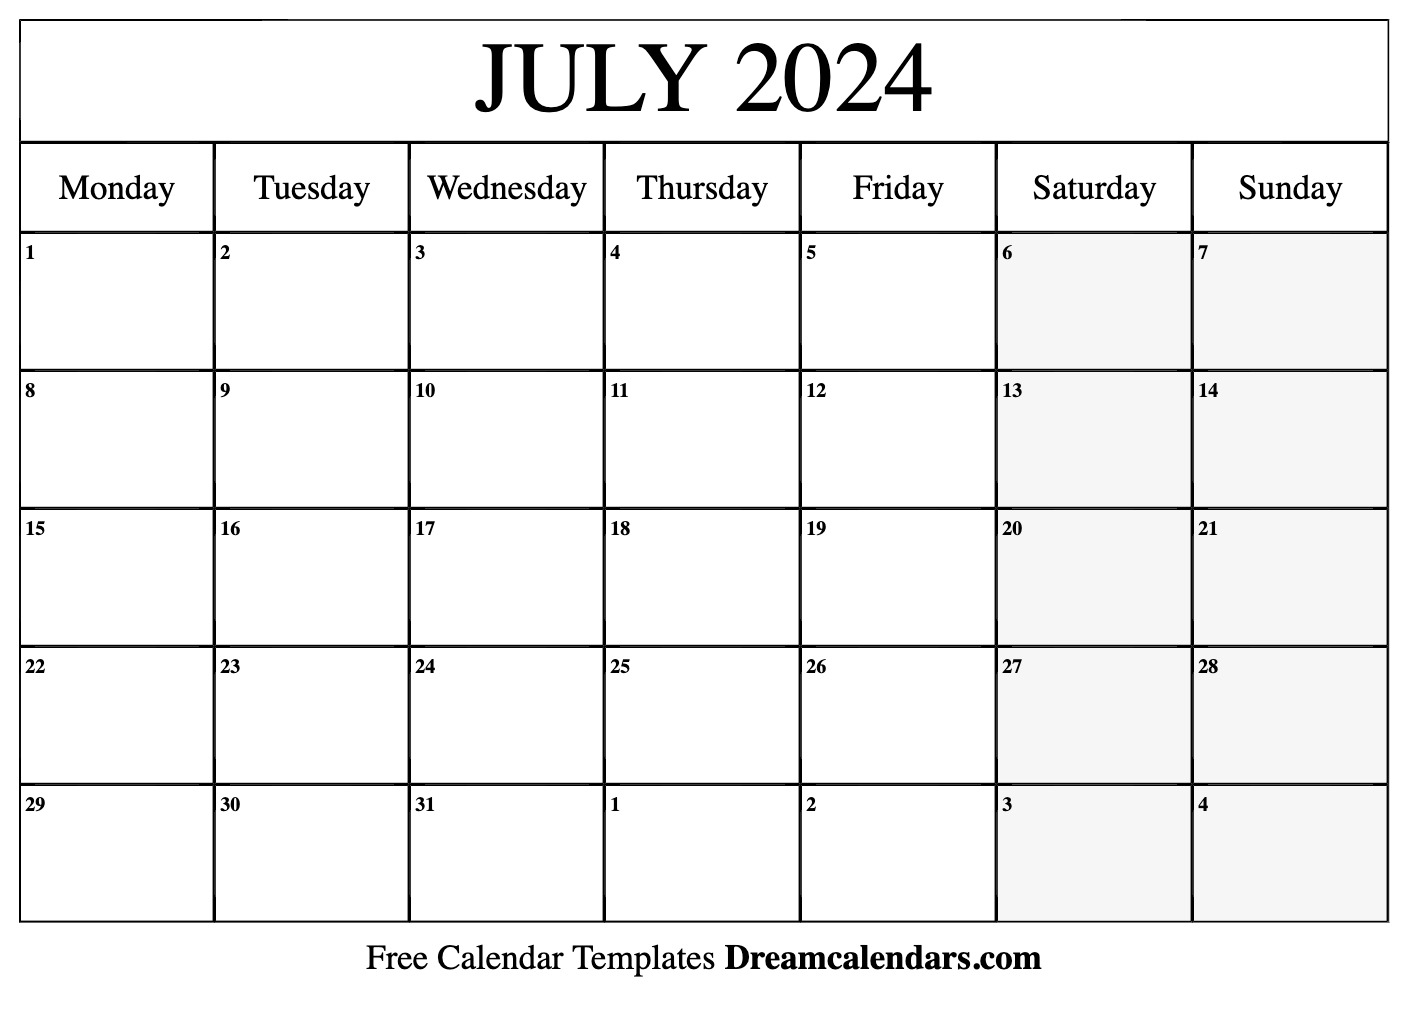 july 2024 calendar calendarlabs - july 2024 calendar printable | free ...